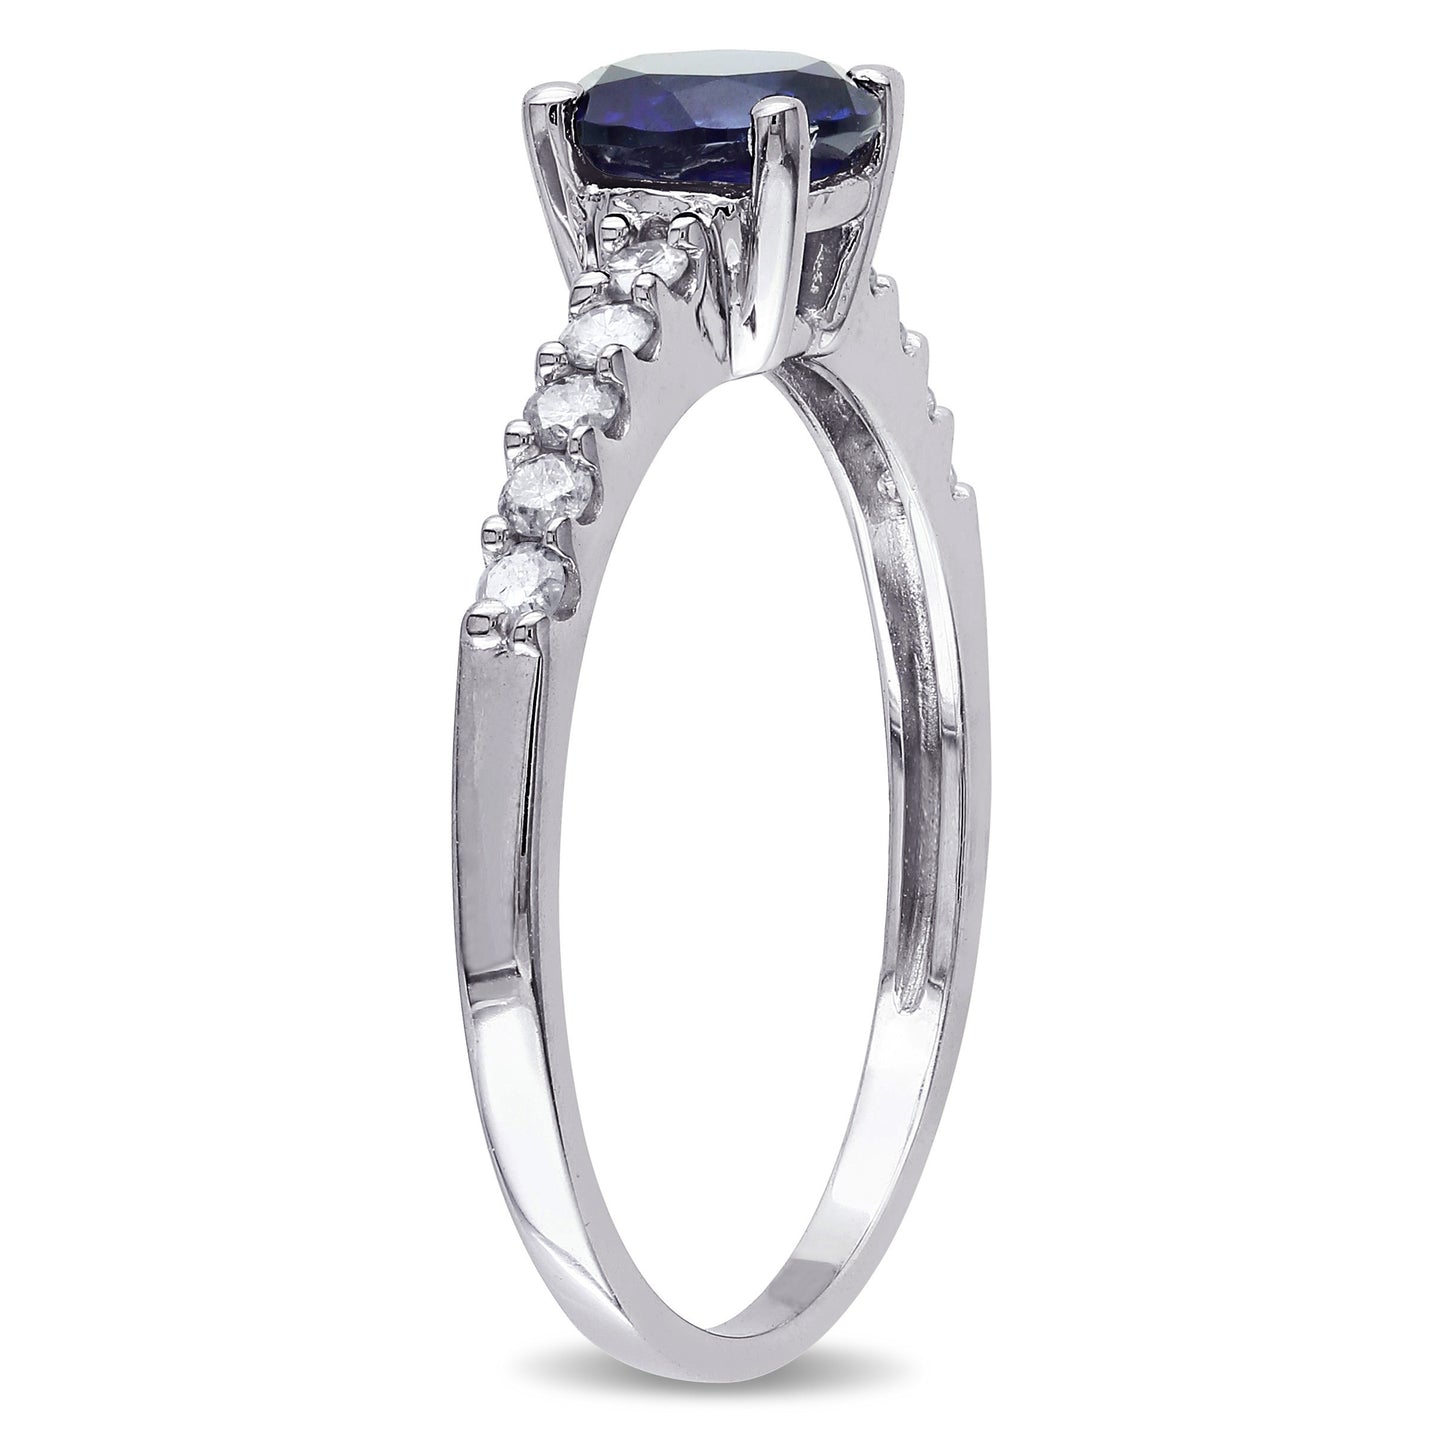 Round Cut 1ct Sapphire & 1/4ct Diamond Ring in 10k White Gold